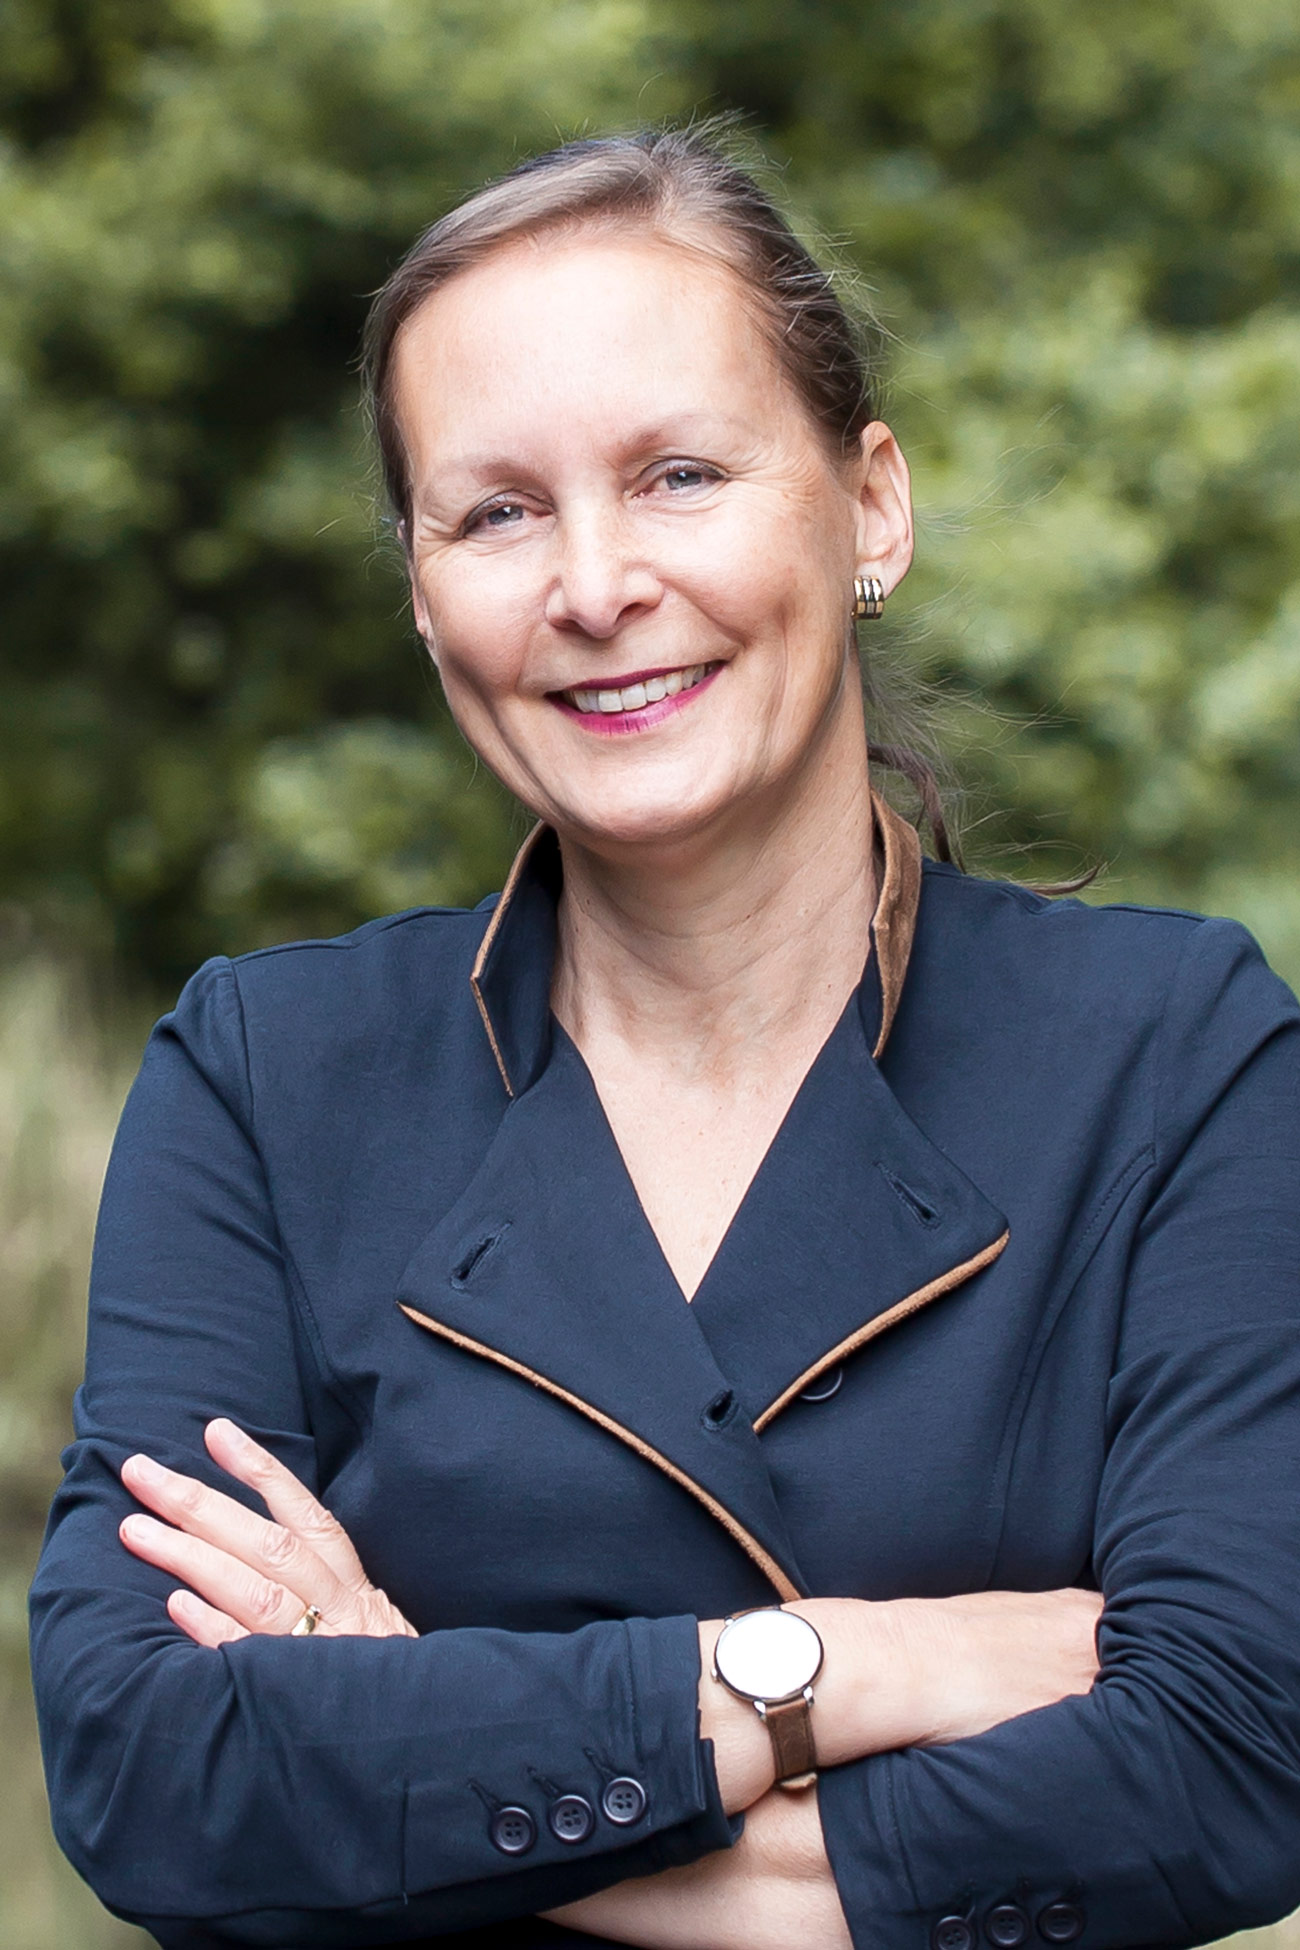 Eveline van der Schraaf